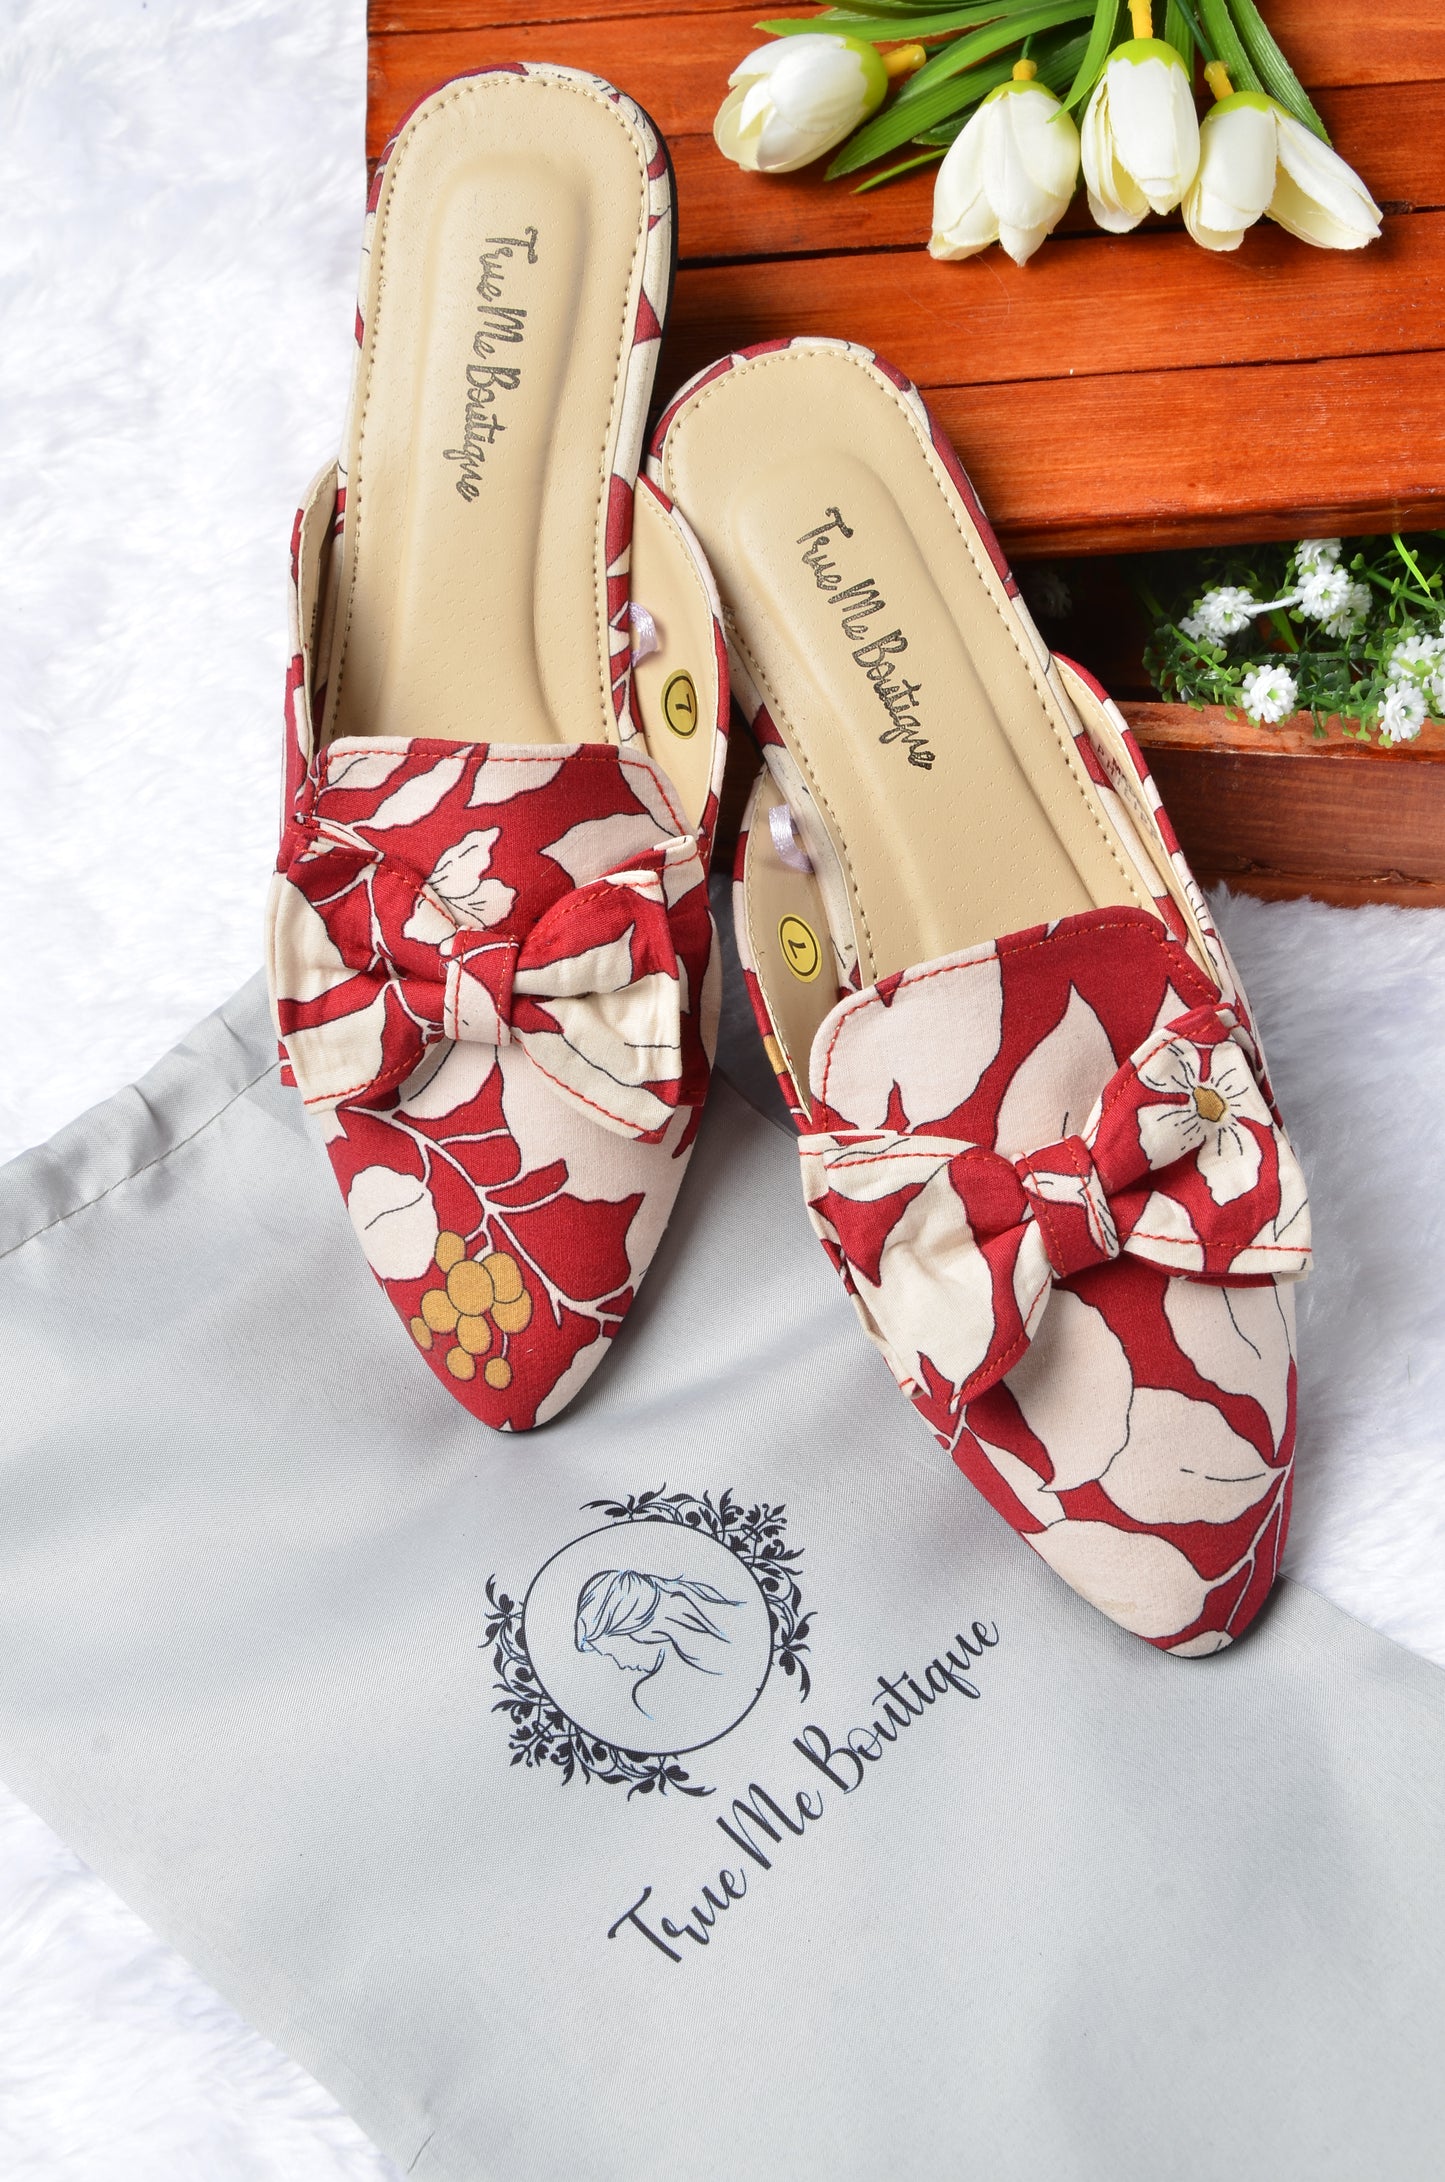 Flower Sandals with Tie